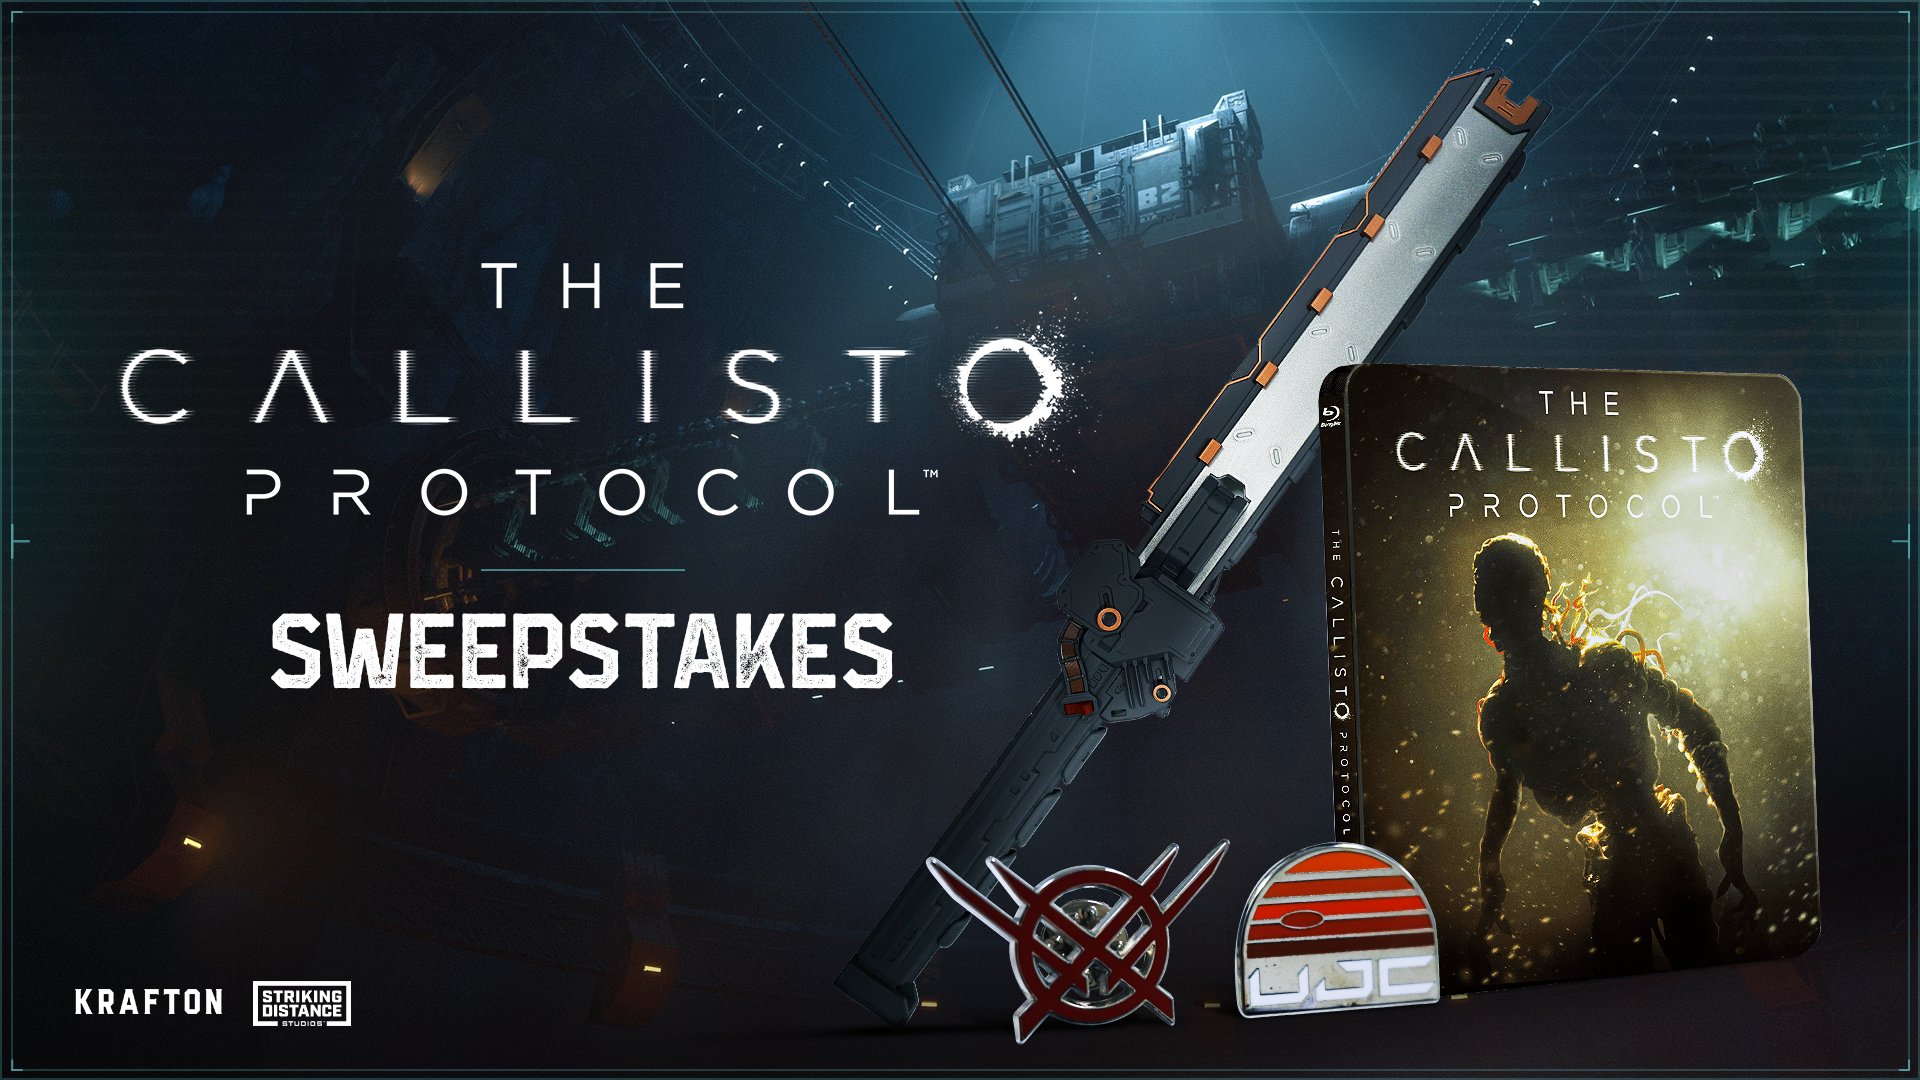 The Callisto Protocol Final Transmission DLC - What We Know So Far